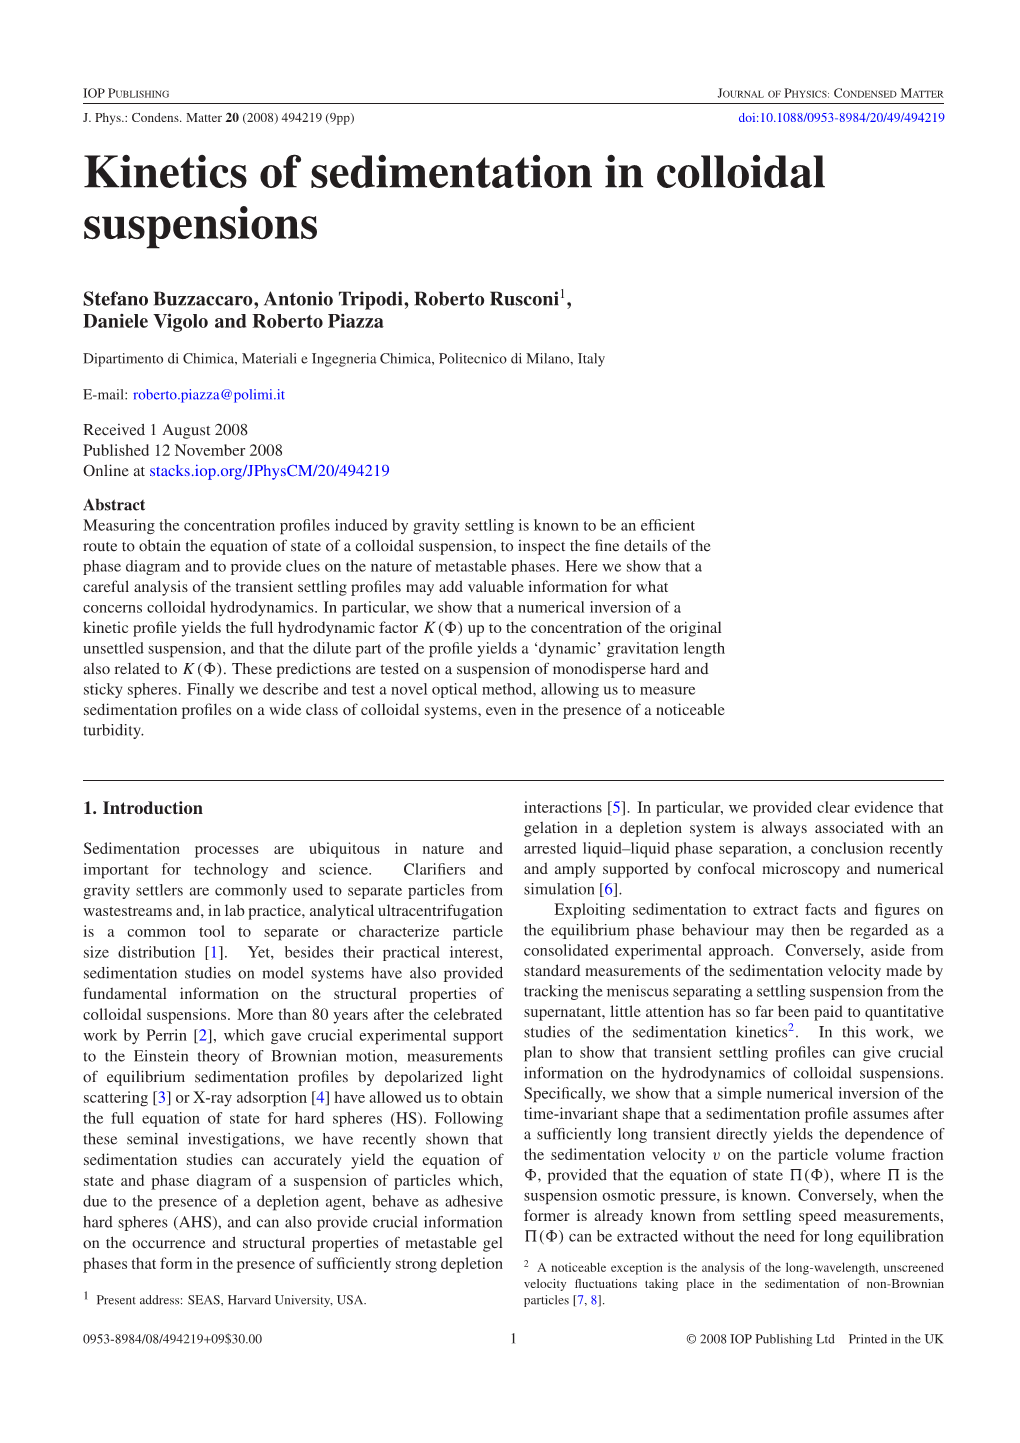 Kinetics of Sedimentation in Colloidal Suspensions